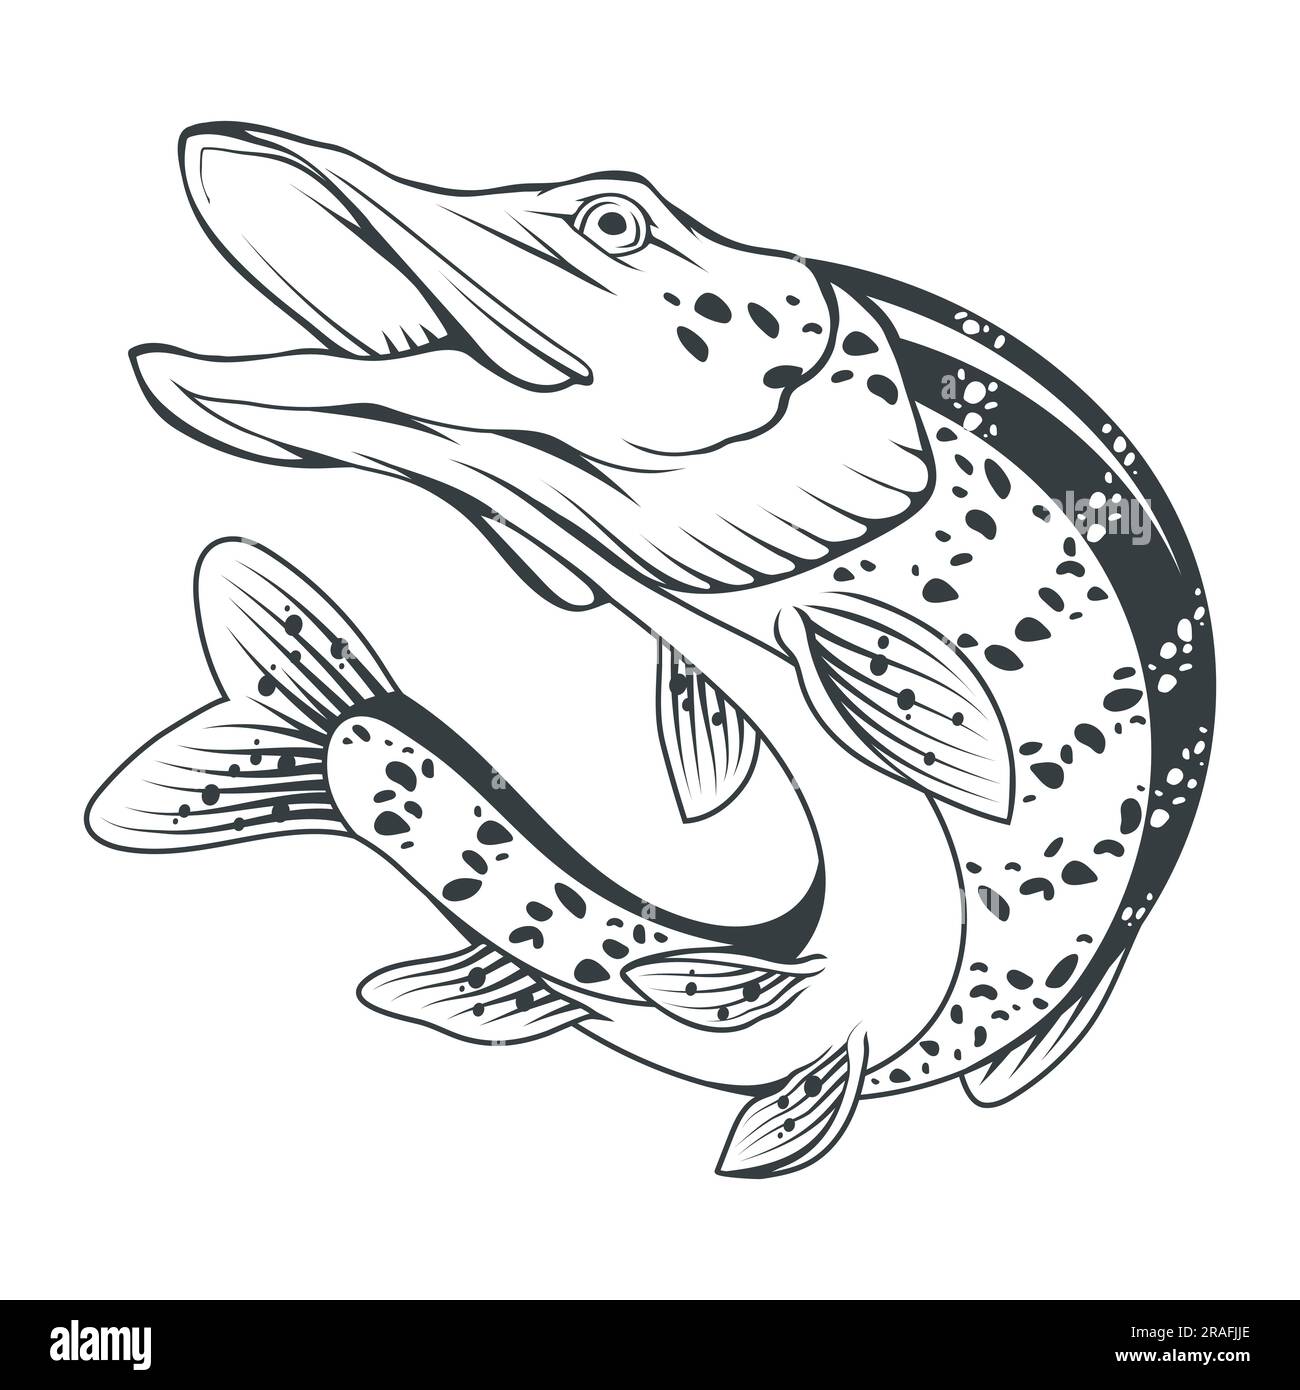 https://c8.alamy.com/comp/2RAFJJE/pike-vector-illustration-of-a-sketch-jumping-fish-fishing-logo-angry-fish-2RAFJJE.jpg